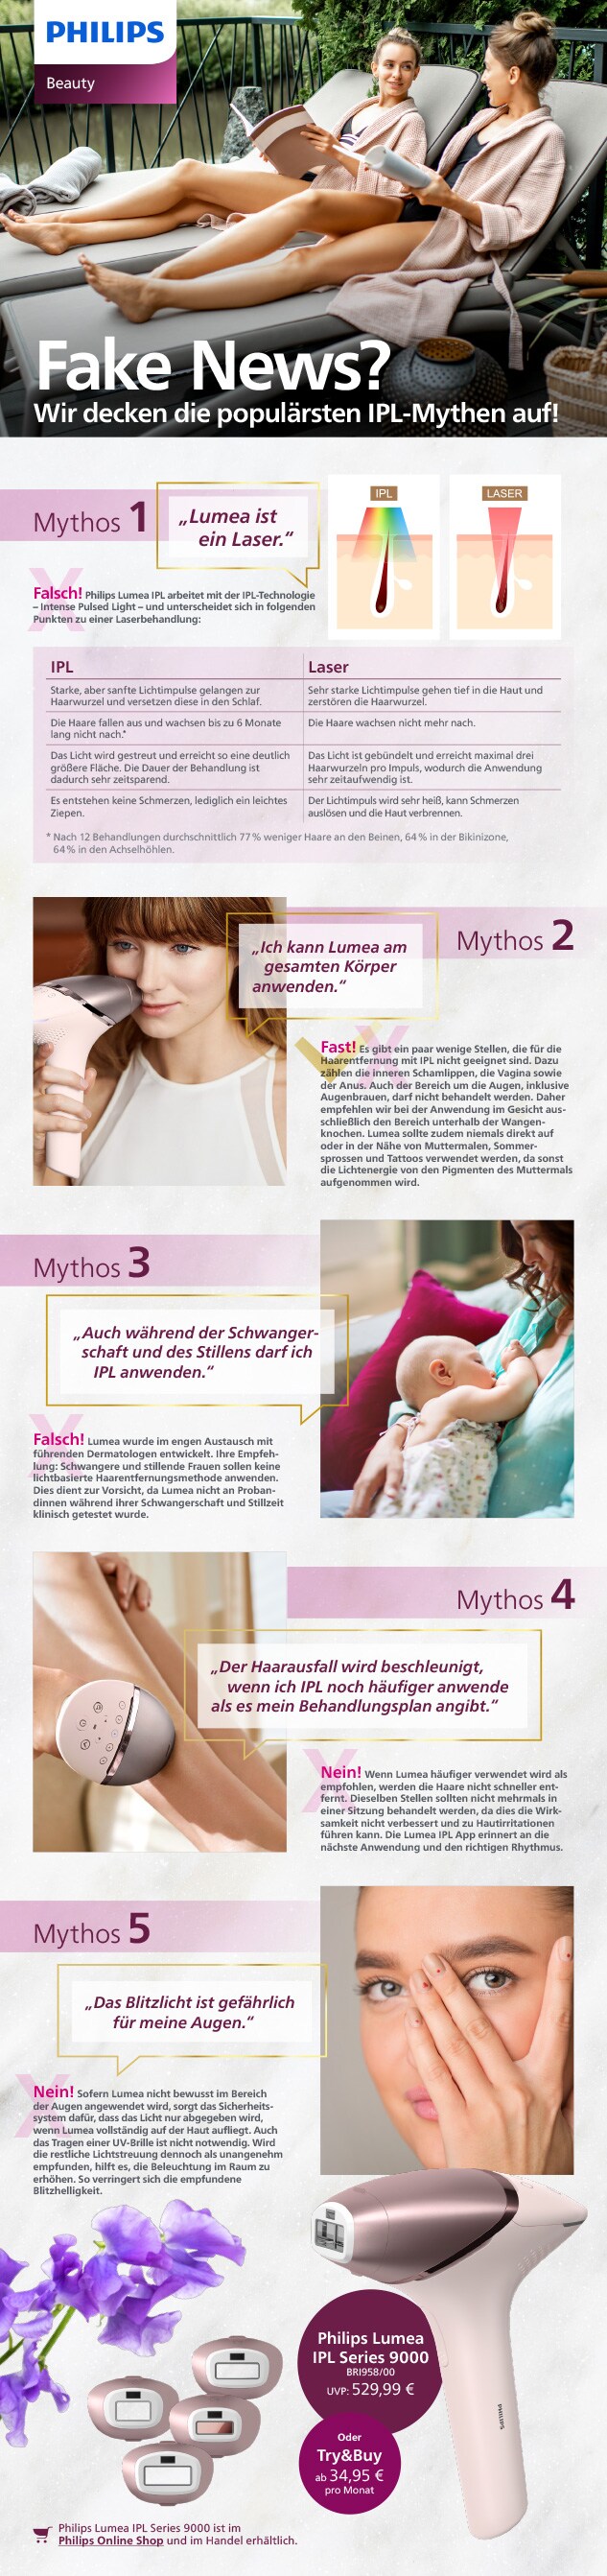 Philips Themensheet Lumea Mythen download pdf